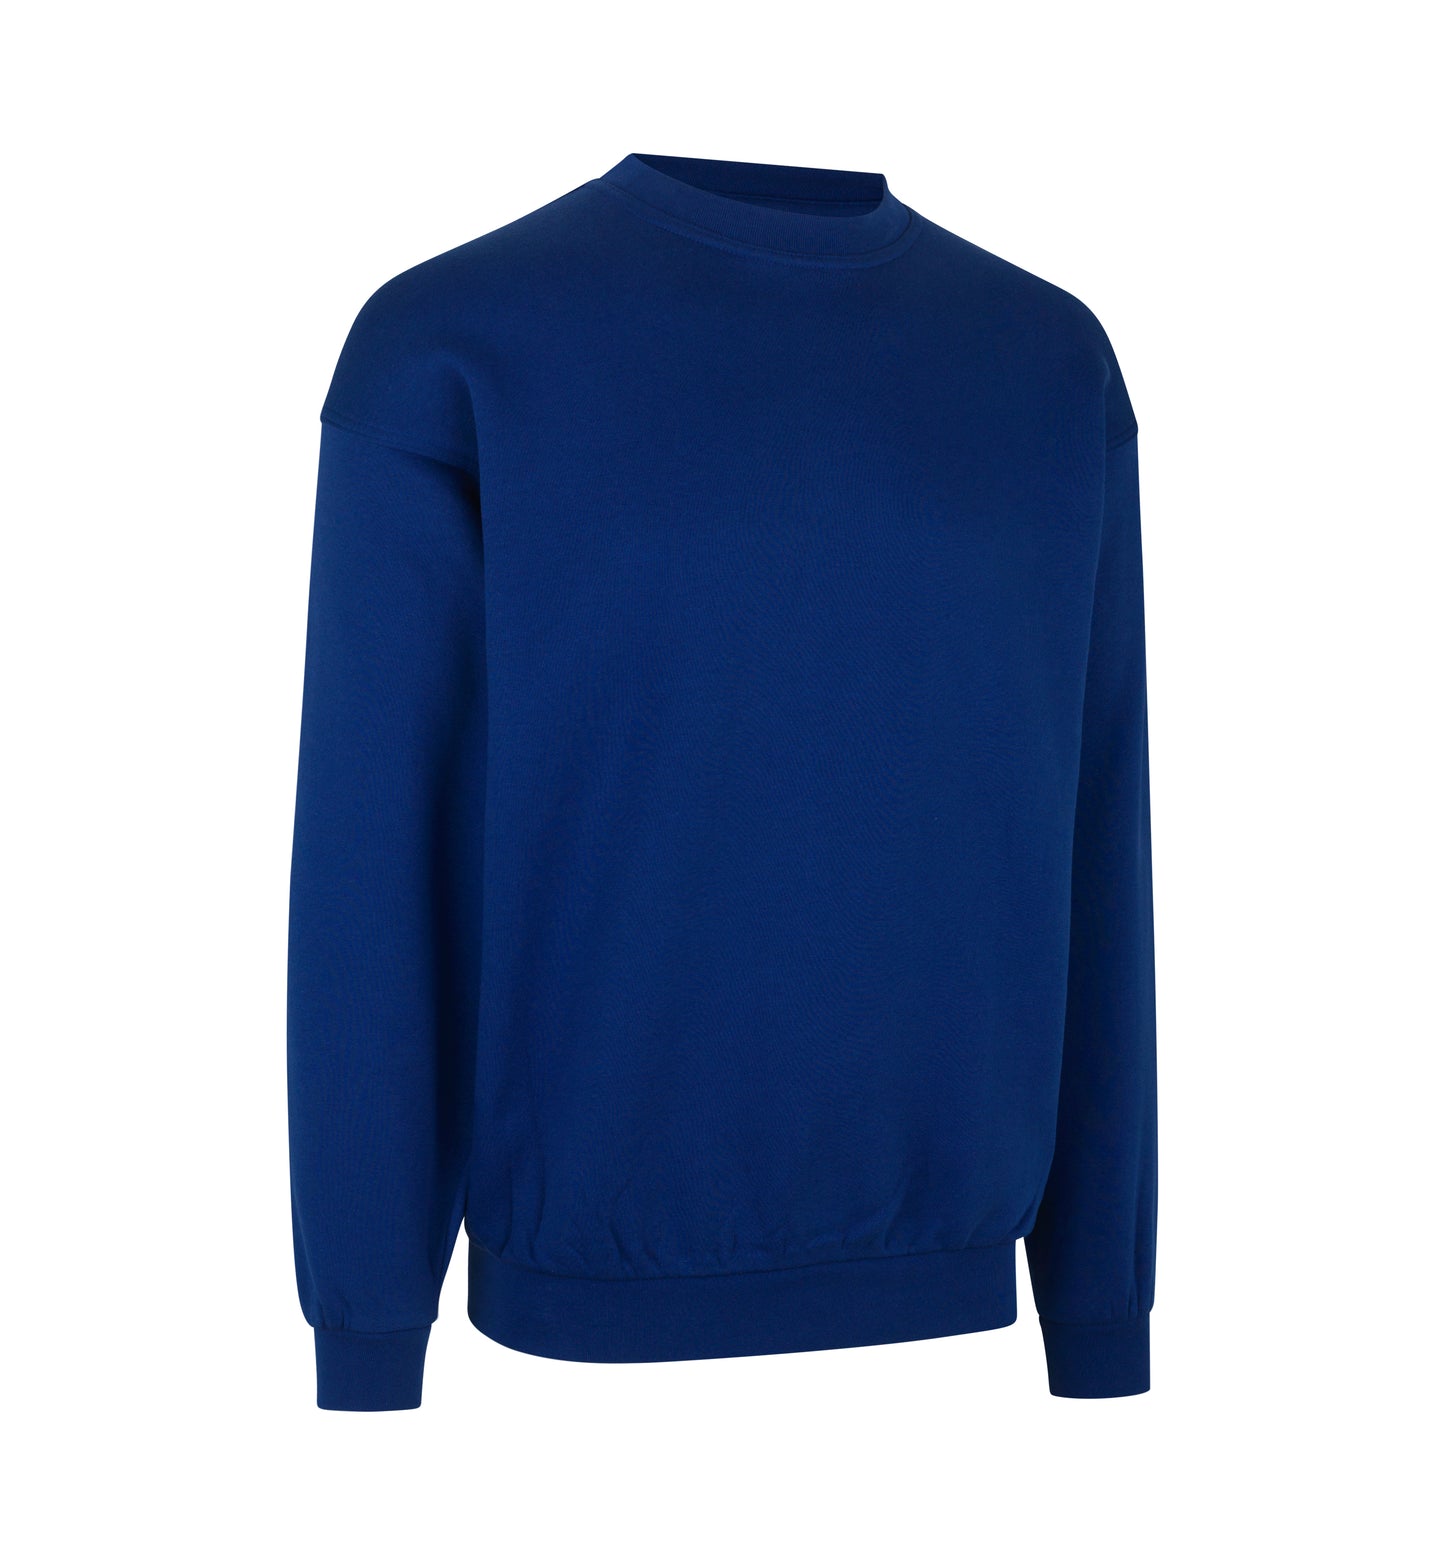 ID PRO Wear sweatshirt classic 0360 (Private Sale)